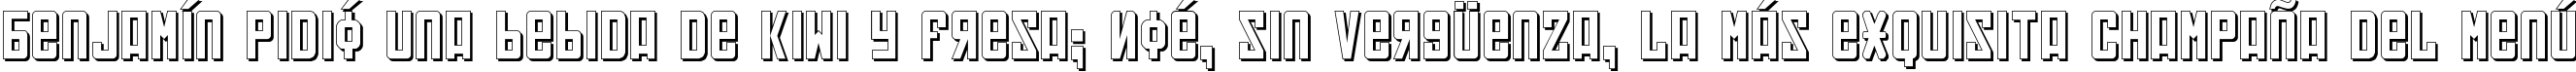 Пример написания шрифтом Soviet 3D текста на испанском